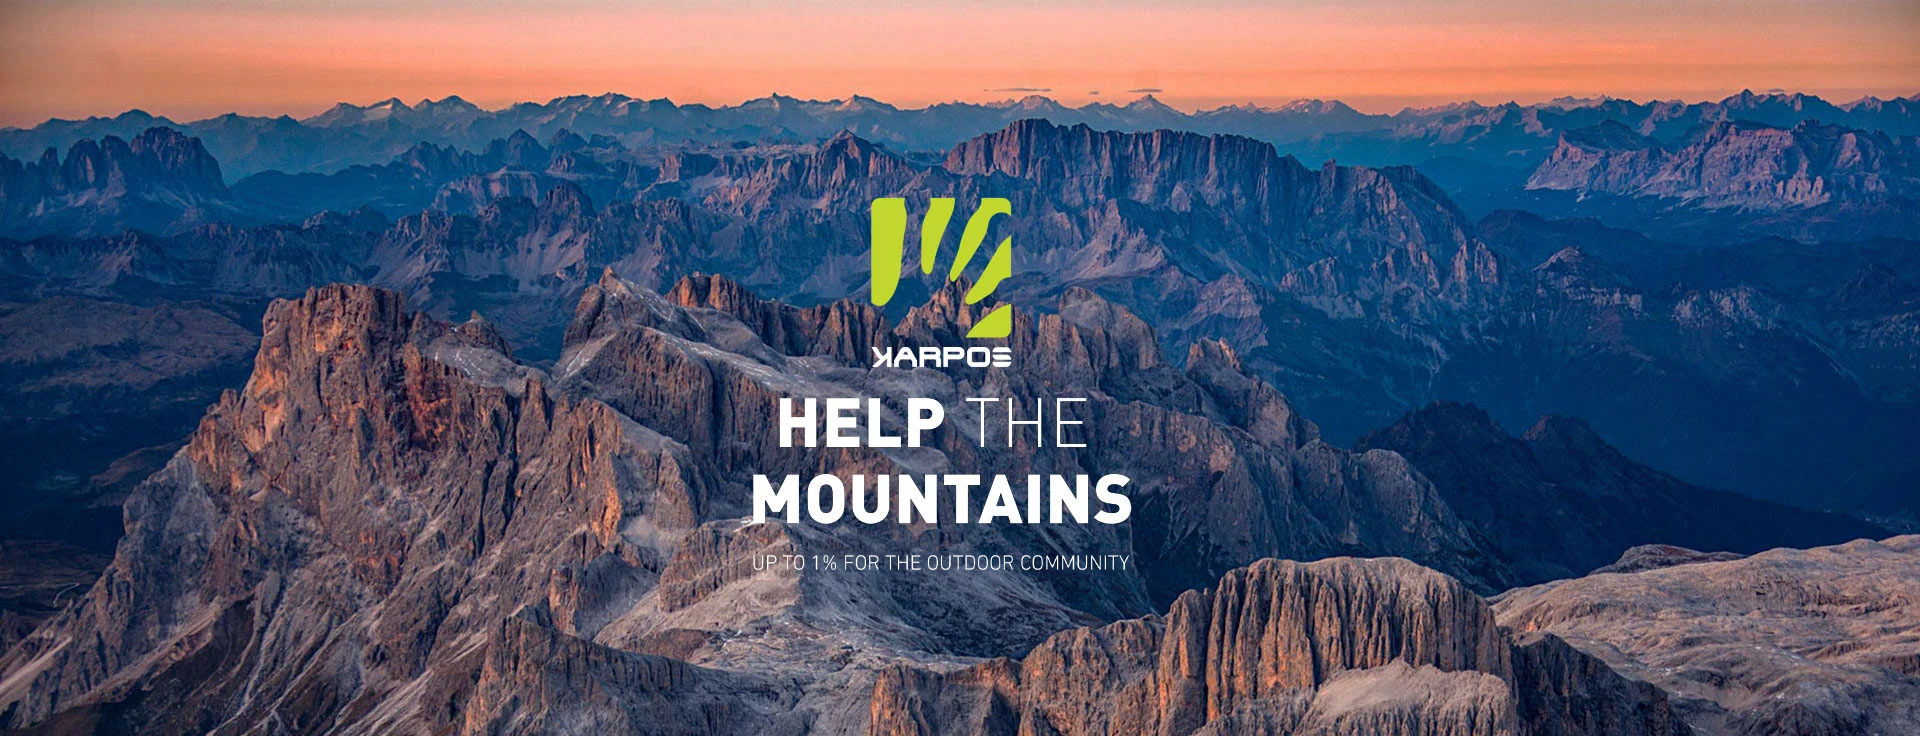 help-the-mountain-banner-desktop.jpg